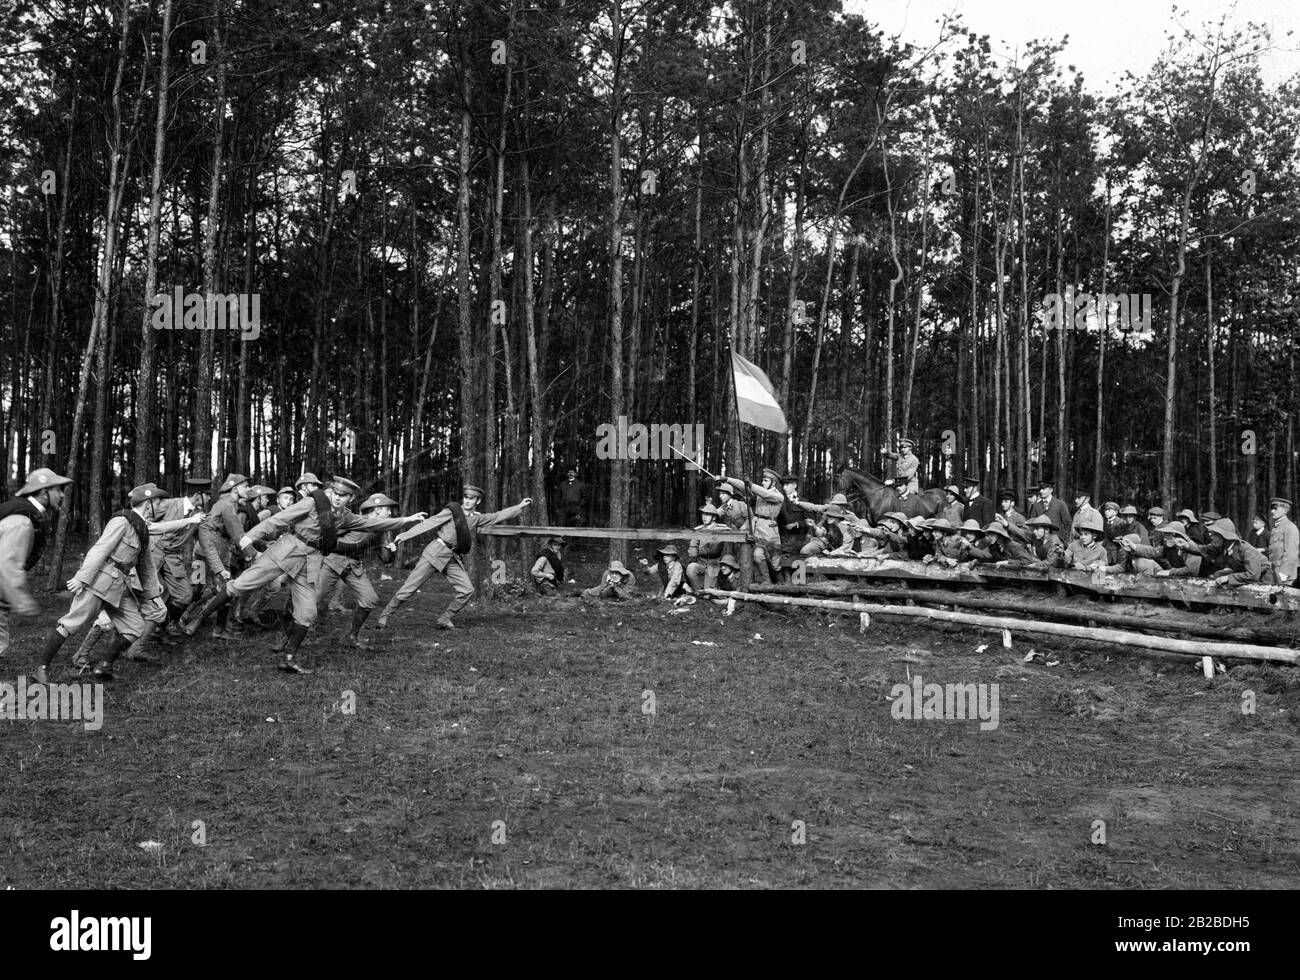 Feldübung des Jugendcorps Blau-Weiss-Blaue Union (alternativ Jungsturm) im Jahr 1911. Stockfoto